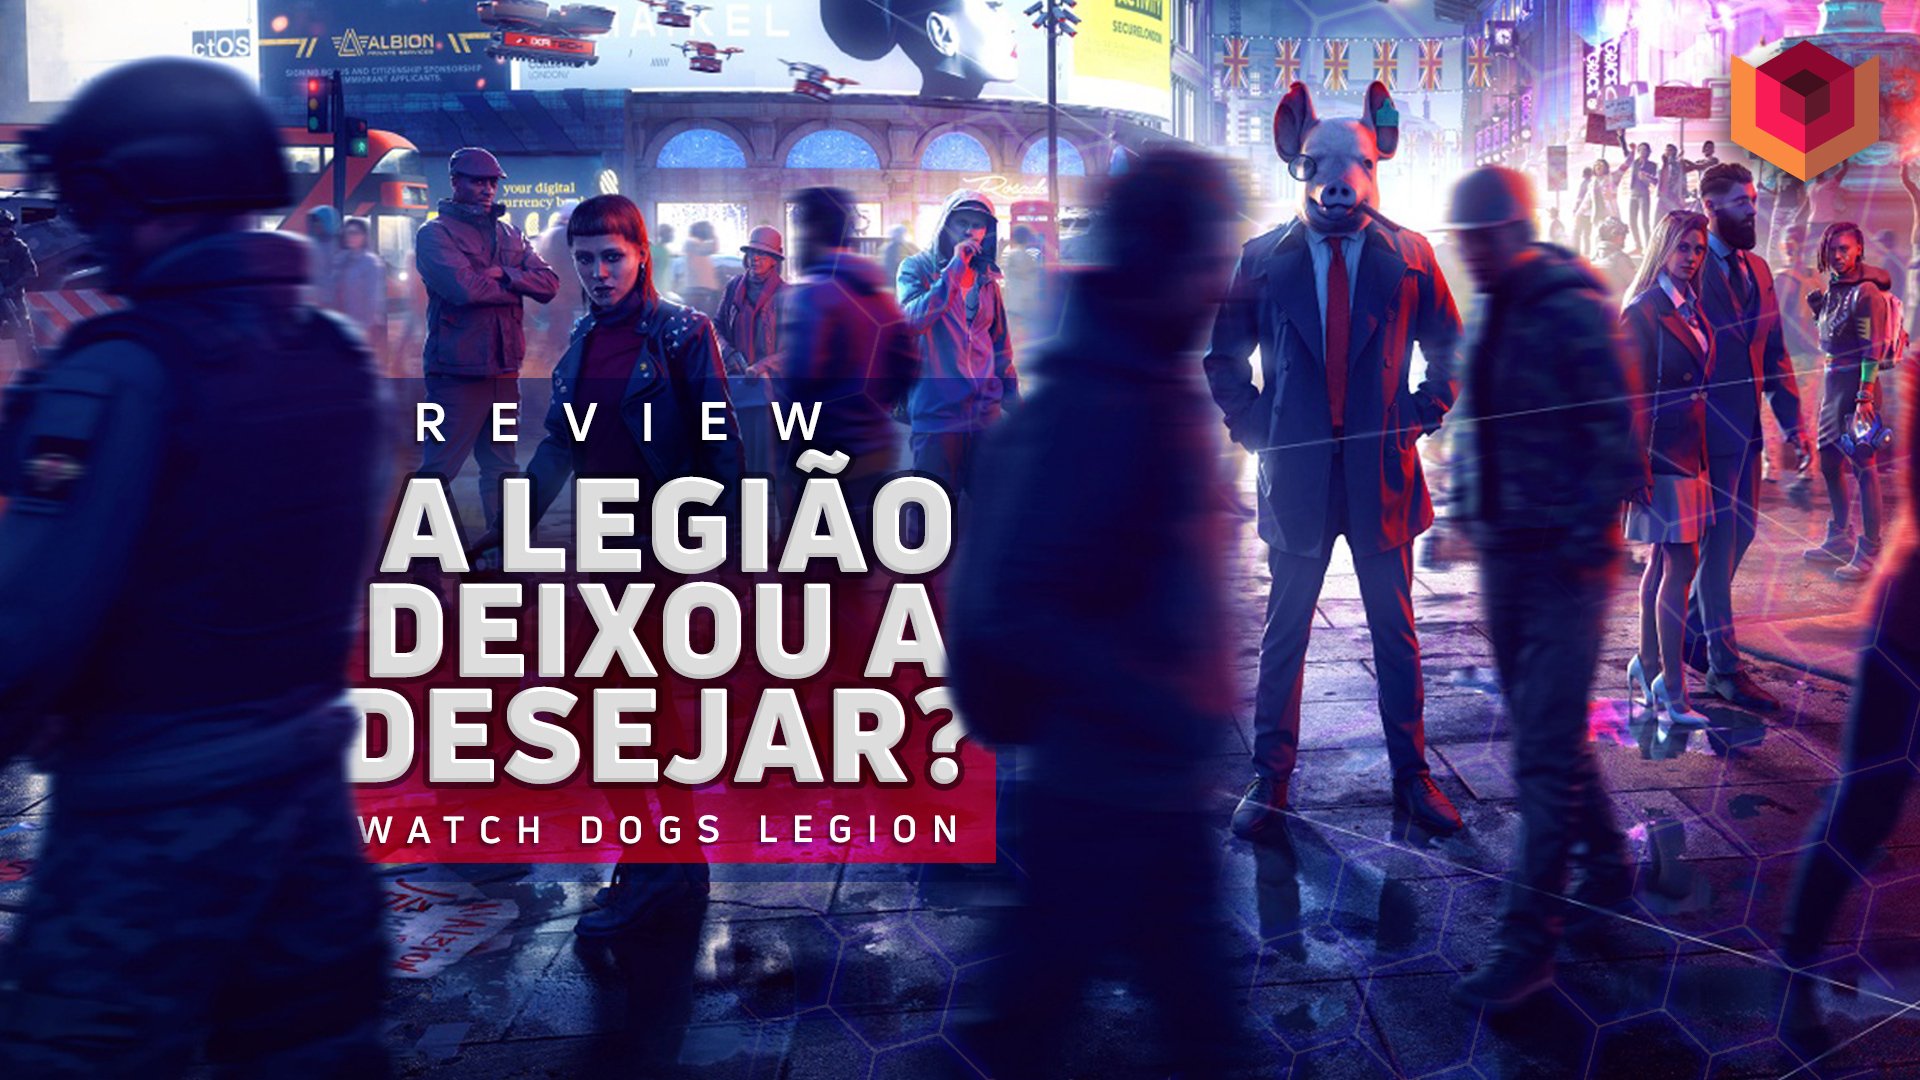 Watch Dogs Legion: a legião deixou a desejar?